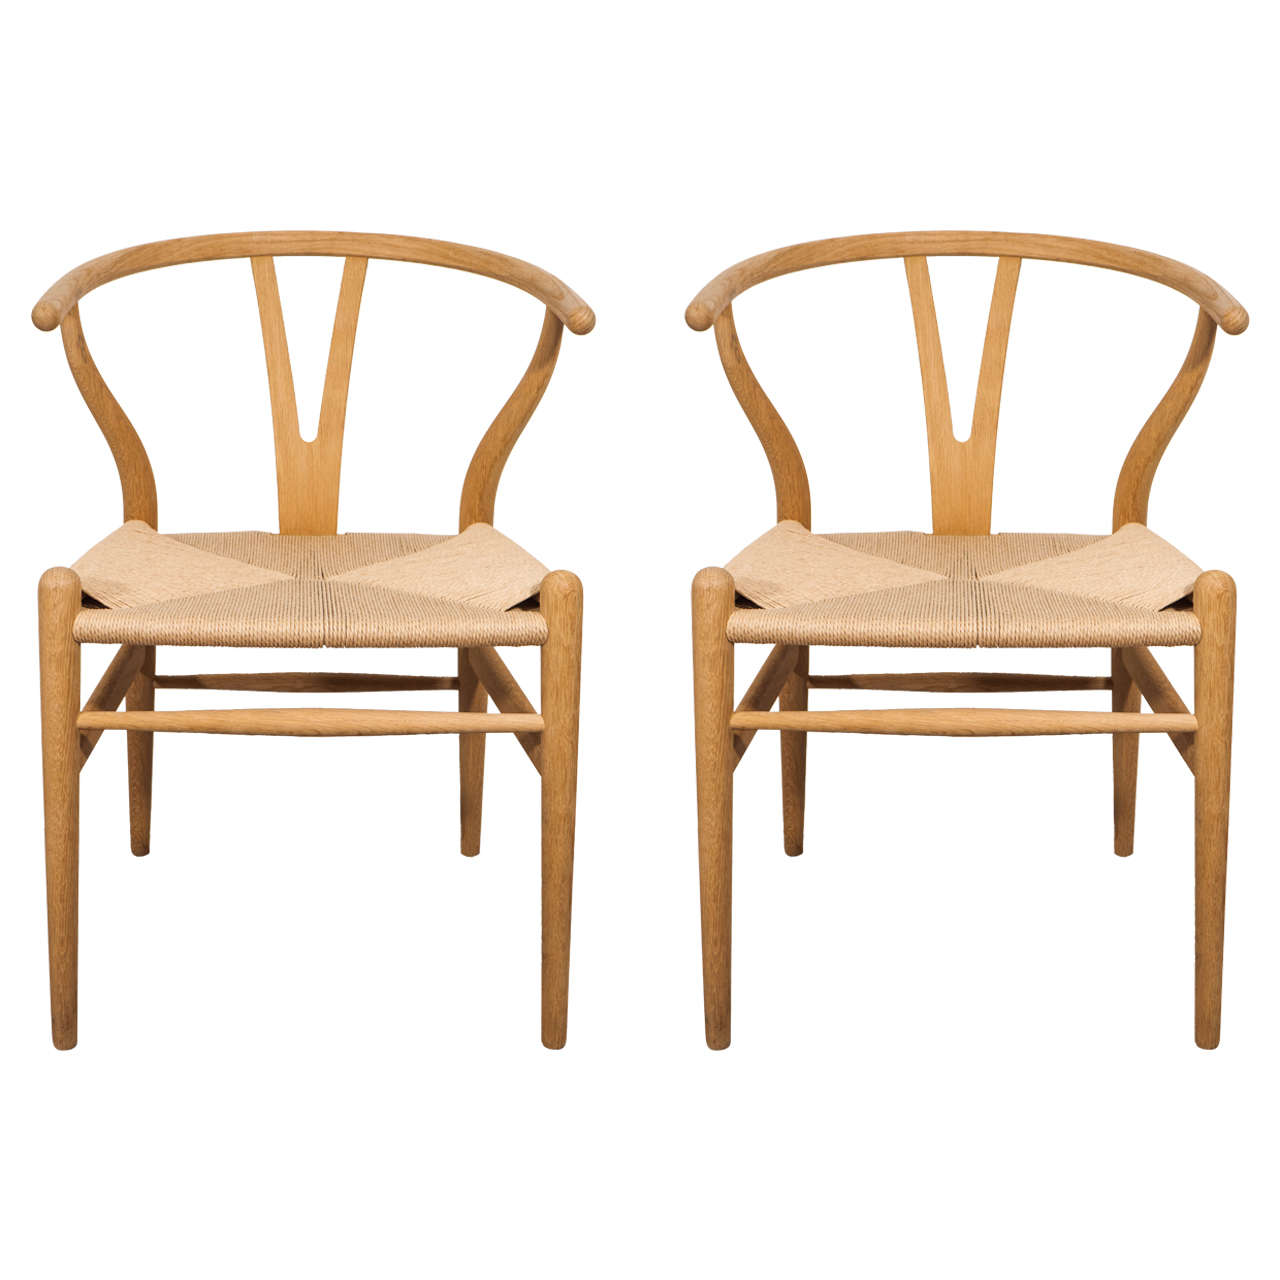 Pair of Wishbone Chairs by Hans J. Wegner for Carl Hansen